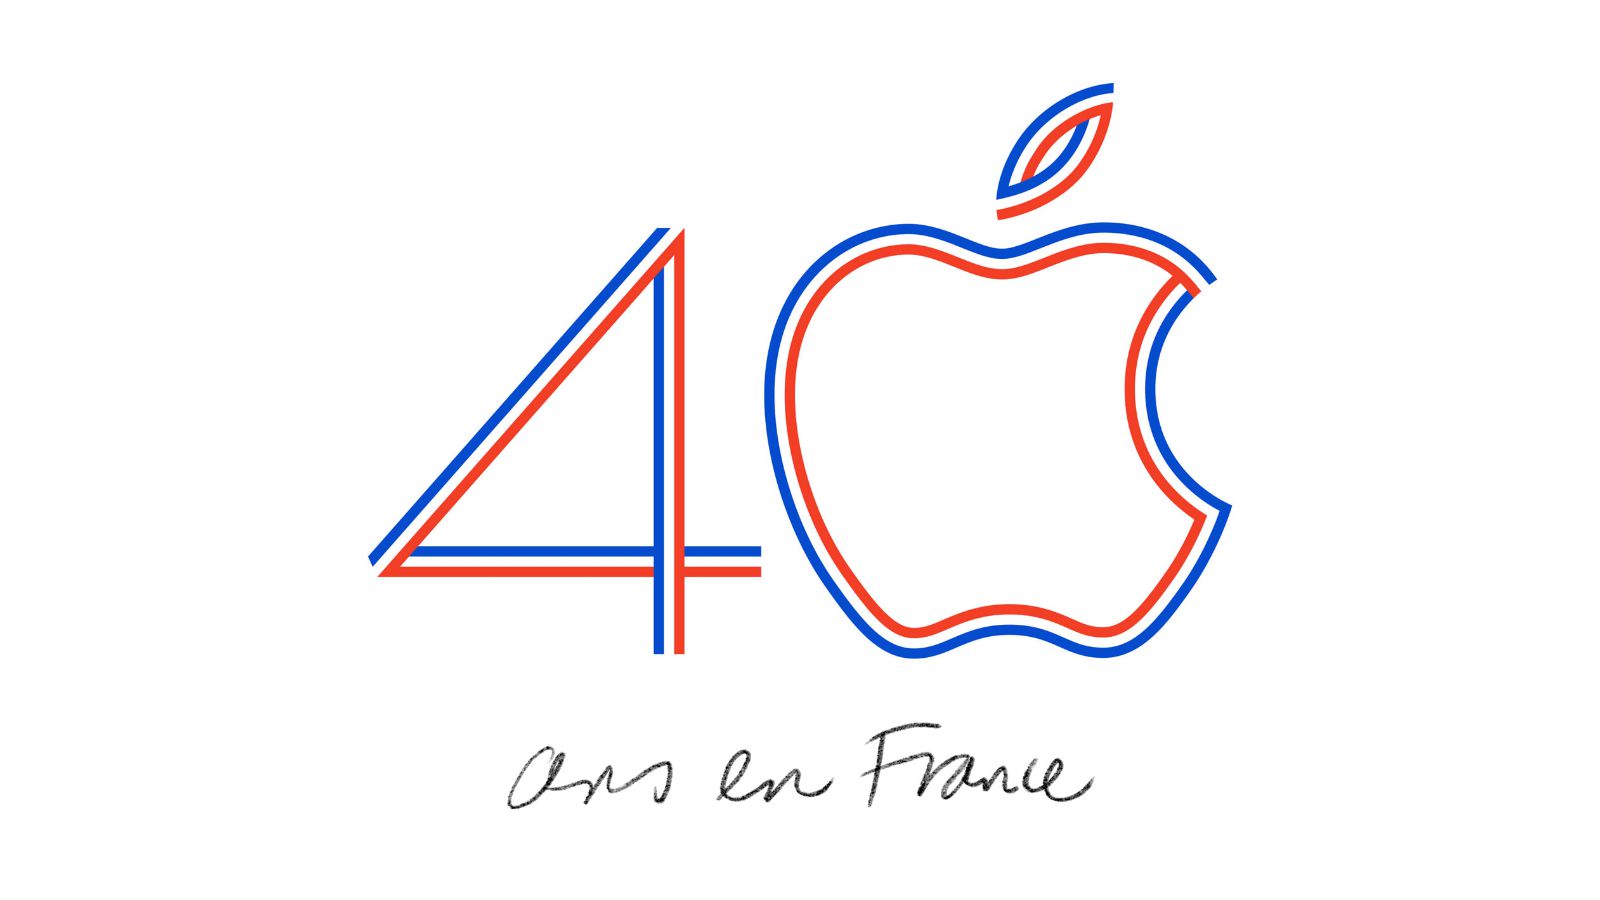 Apple Celebrates 40 Years in France and Announces Paris Apple Music Studio